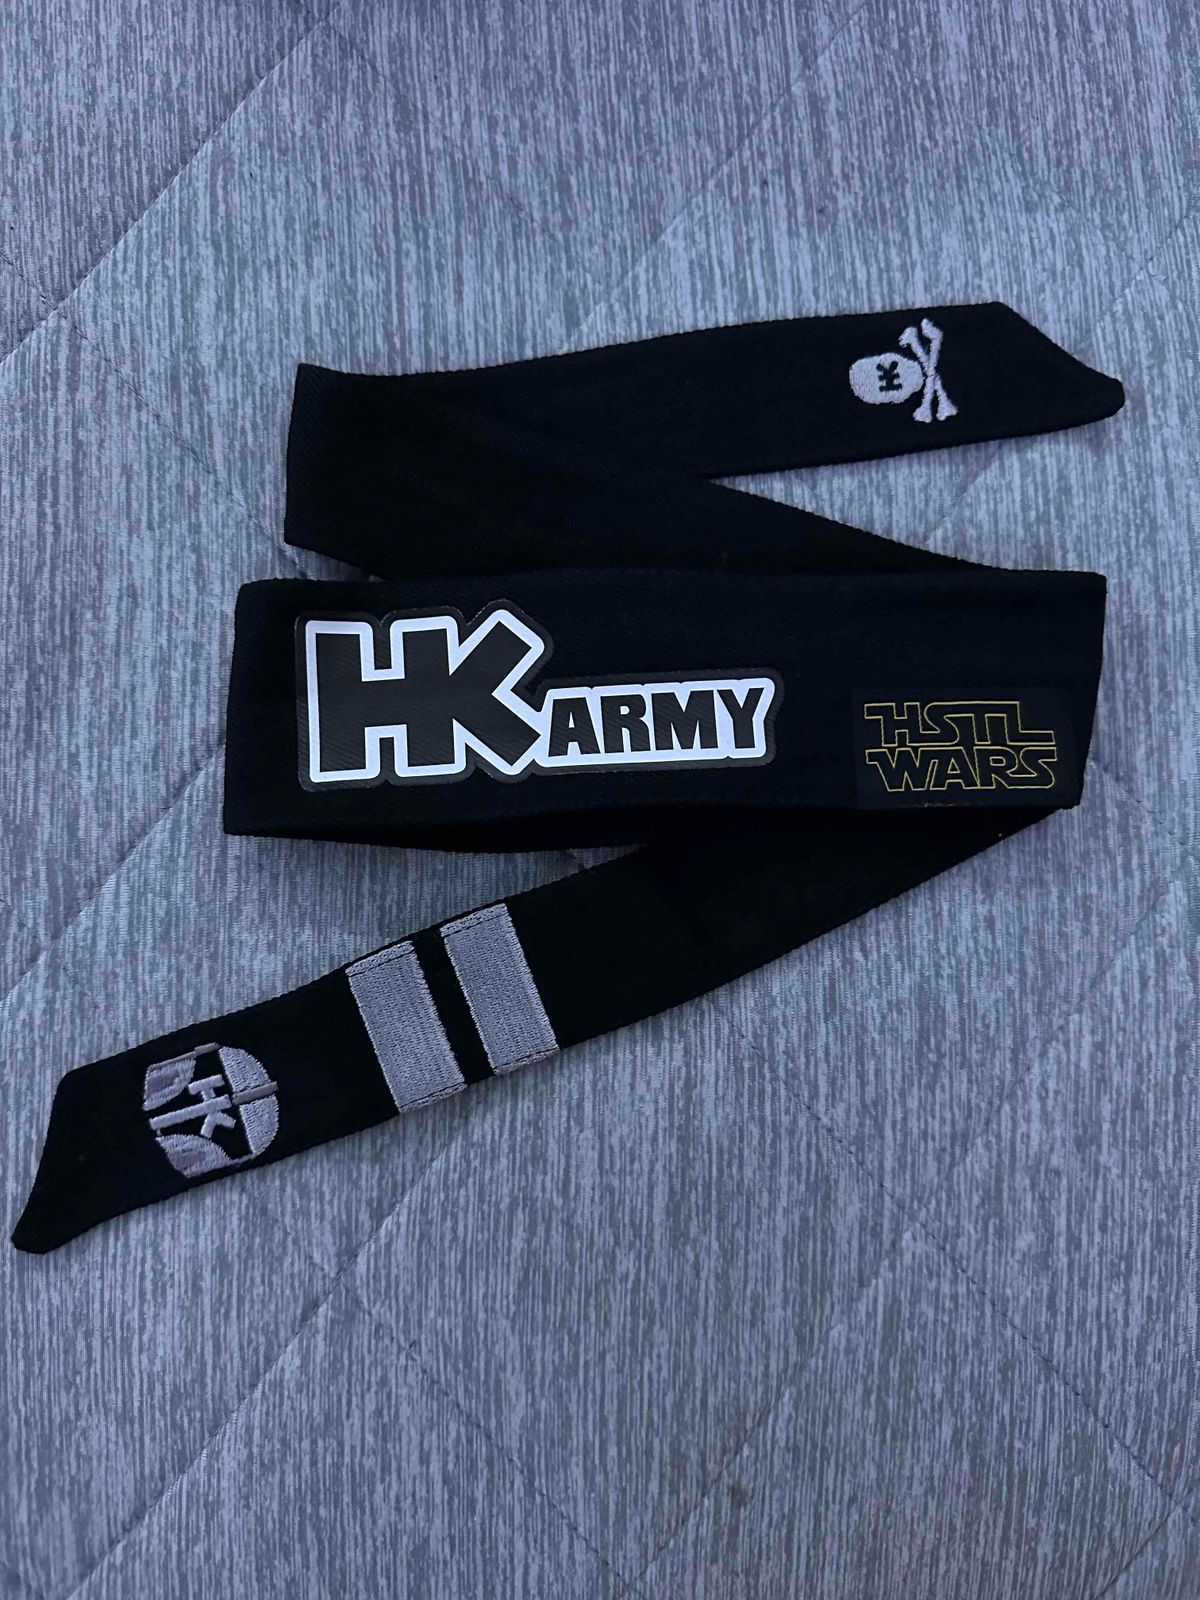 HK Army HSTL WARS “MANDO” Headband 1 of 40